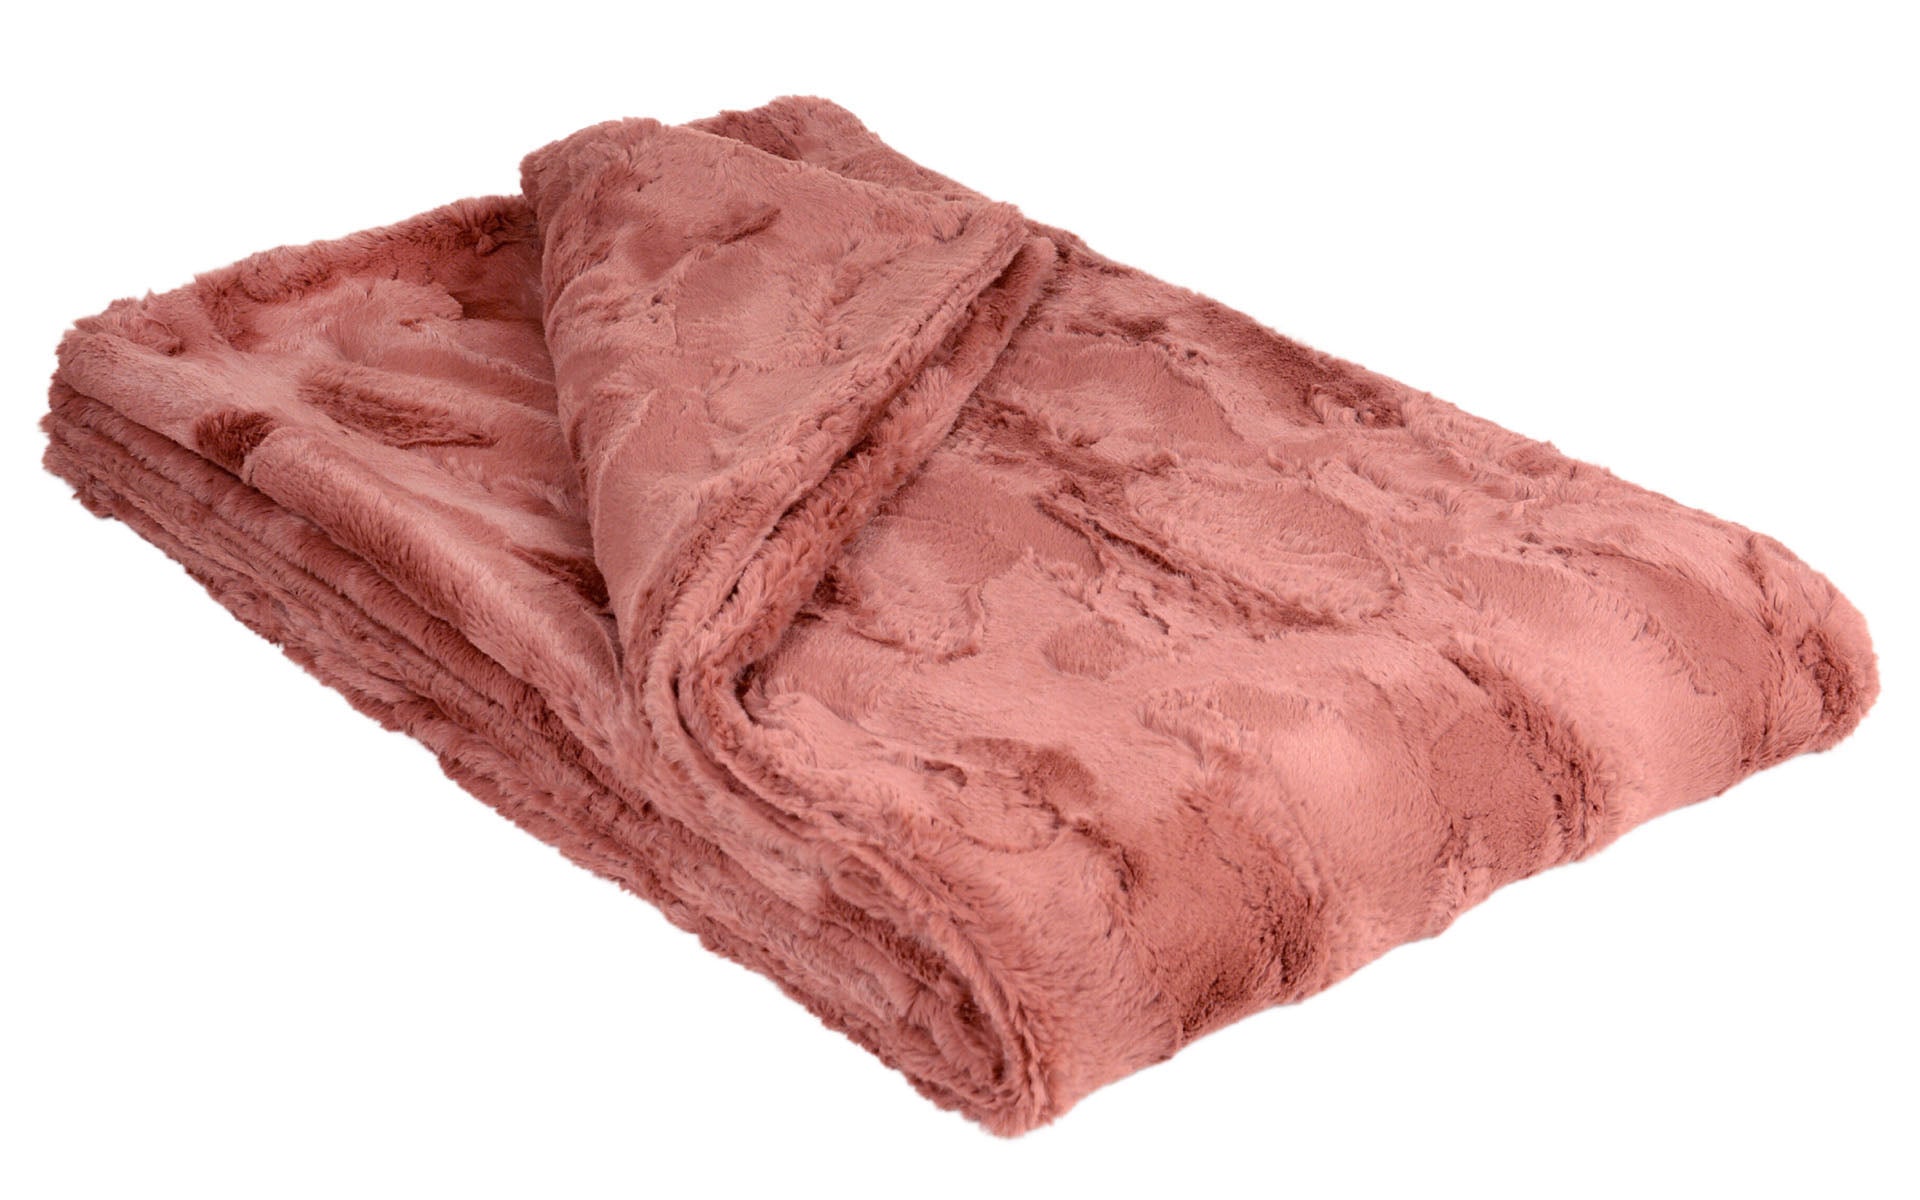 Cuddly Copper River Pet Blanket in Standard size. Handmade by Pandemonium Seattle.